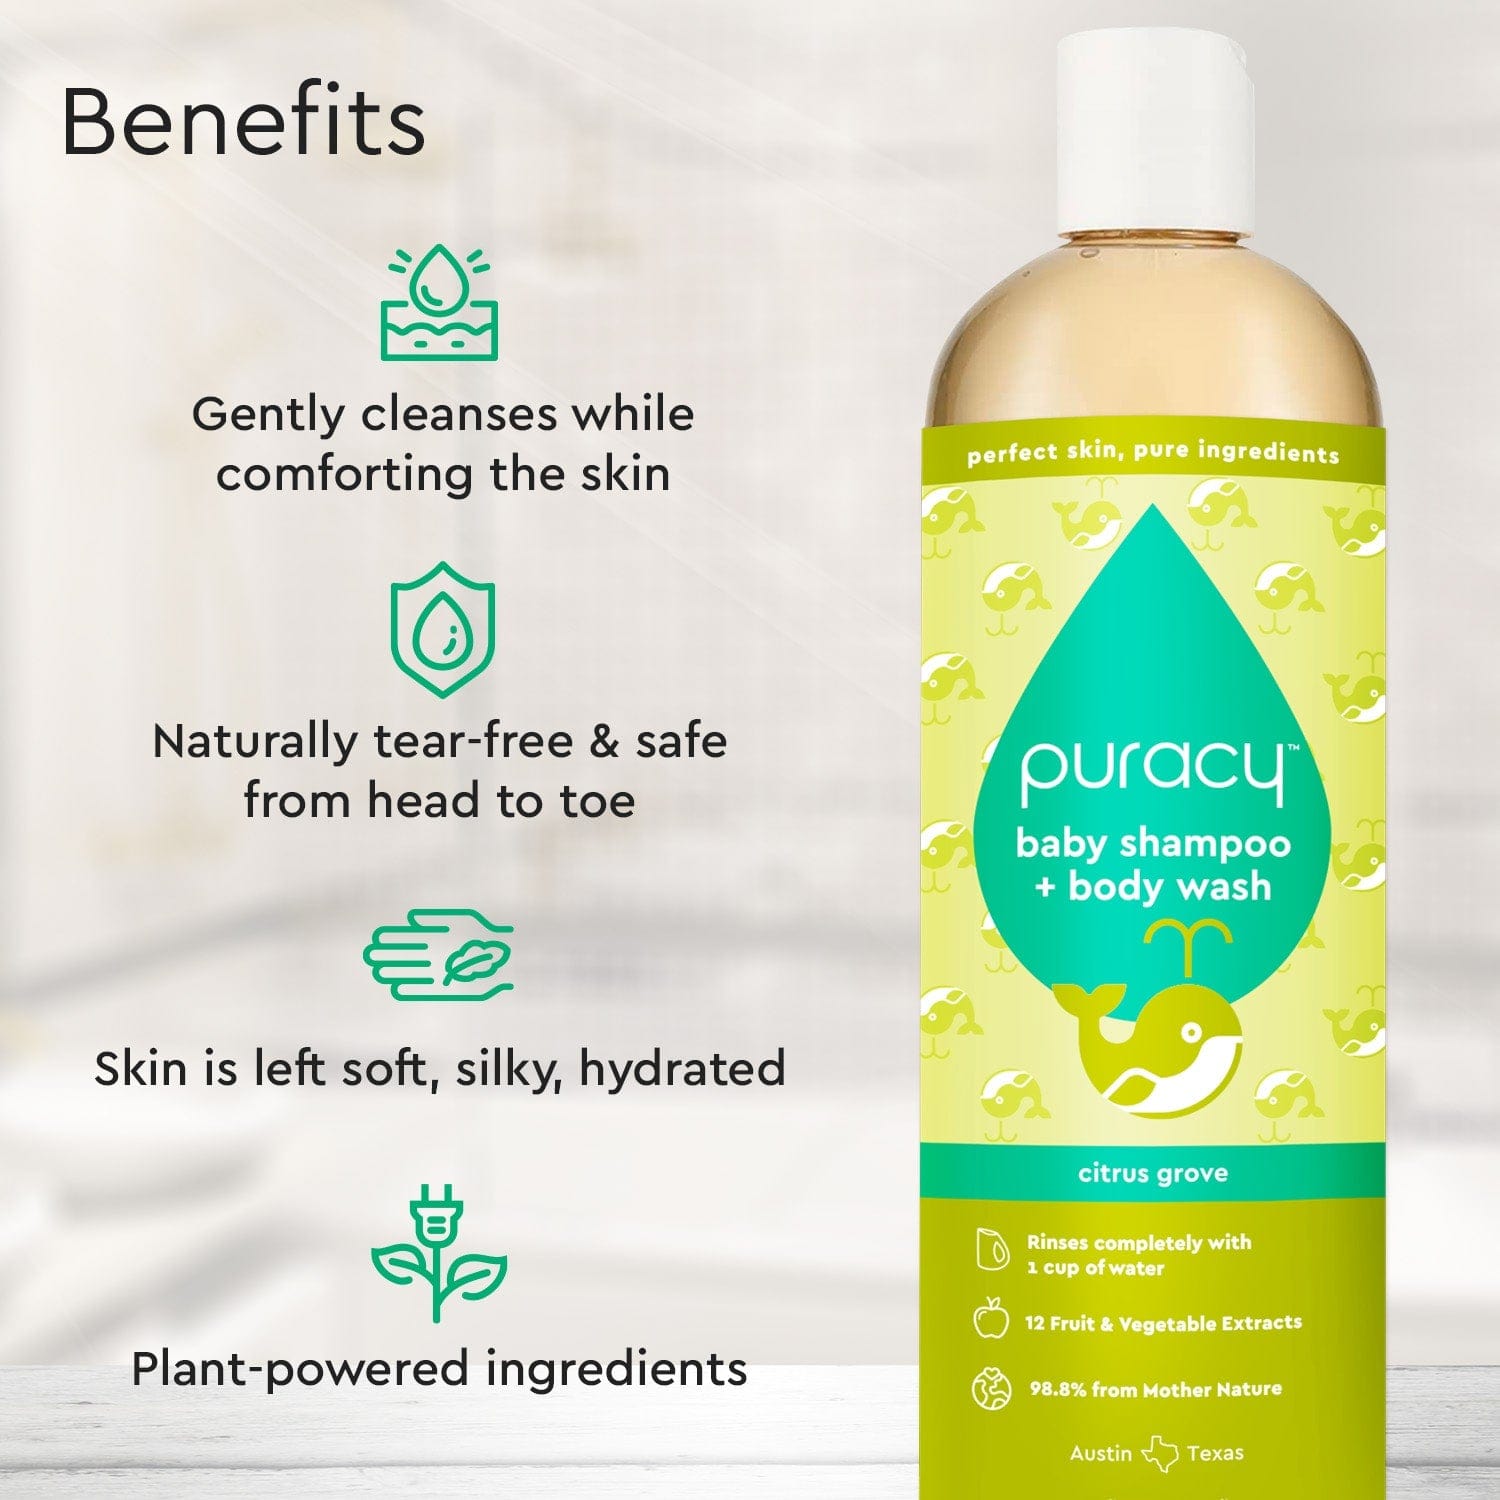 Benefits of Puracy Baby Shampoo & Body Wash